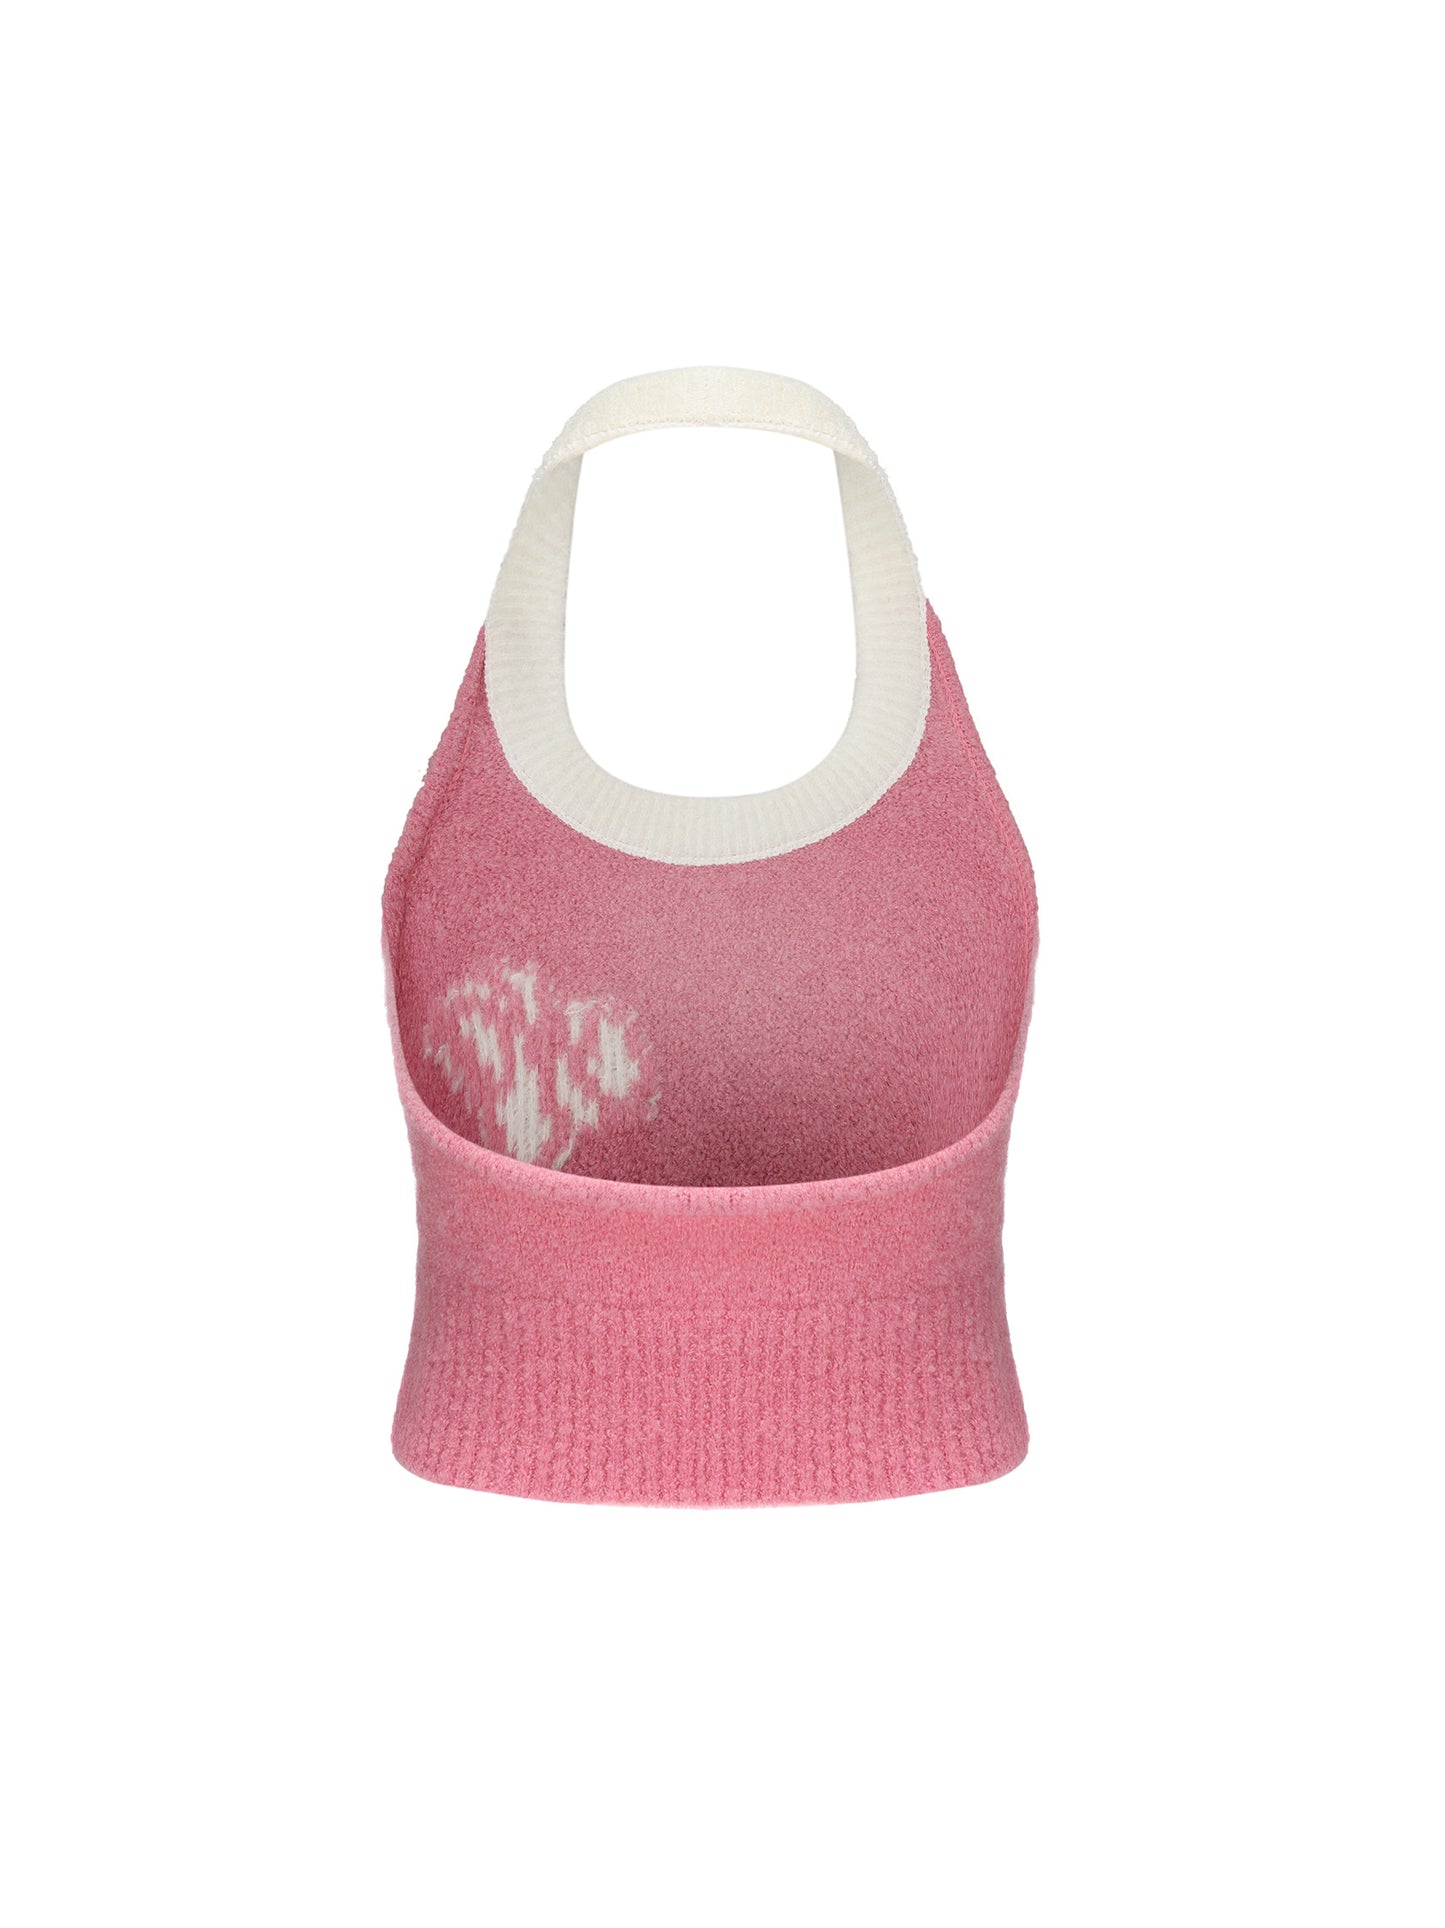 Macie Knit Halter Top (Pink)